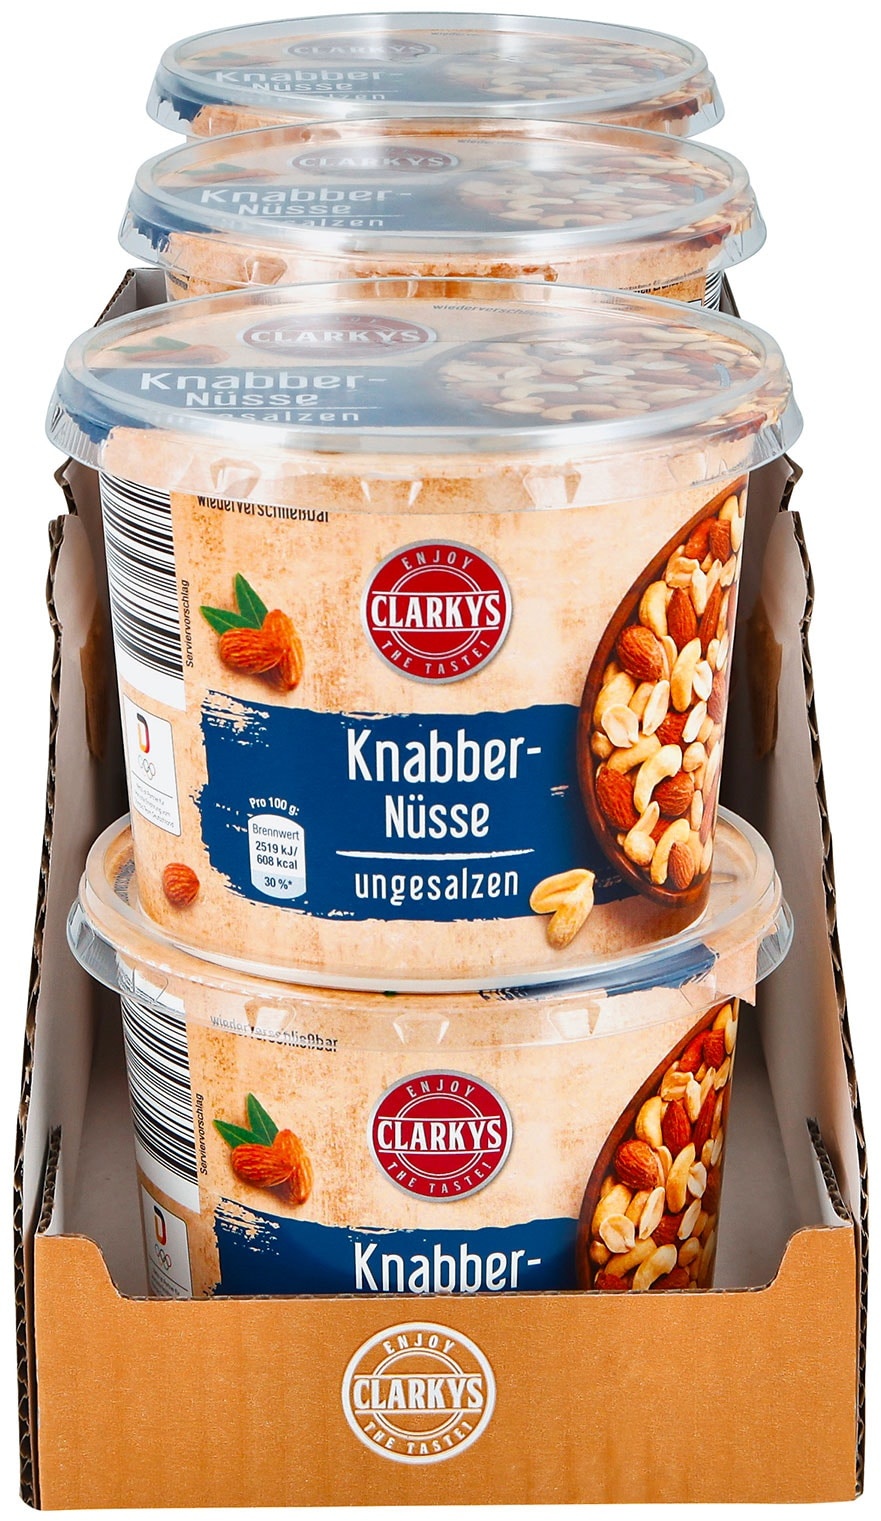 Clarkys Knabber-Nüsse ungesalzen 275 g, 6er Pack